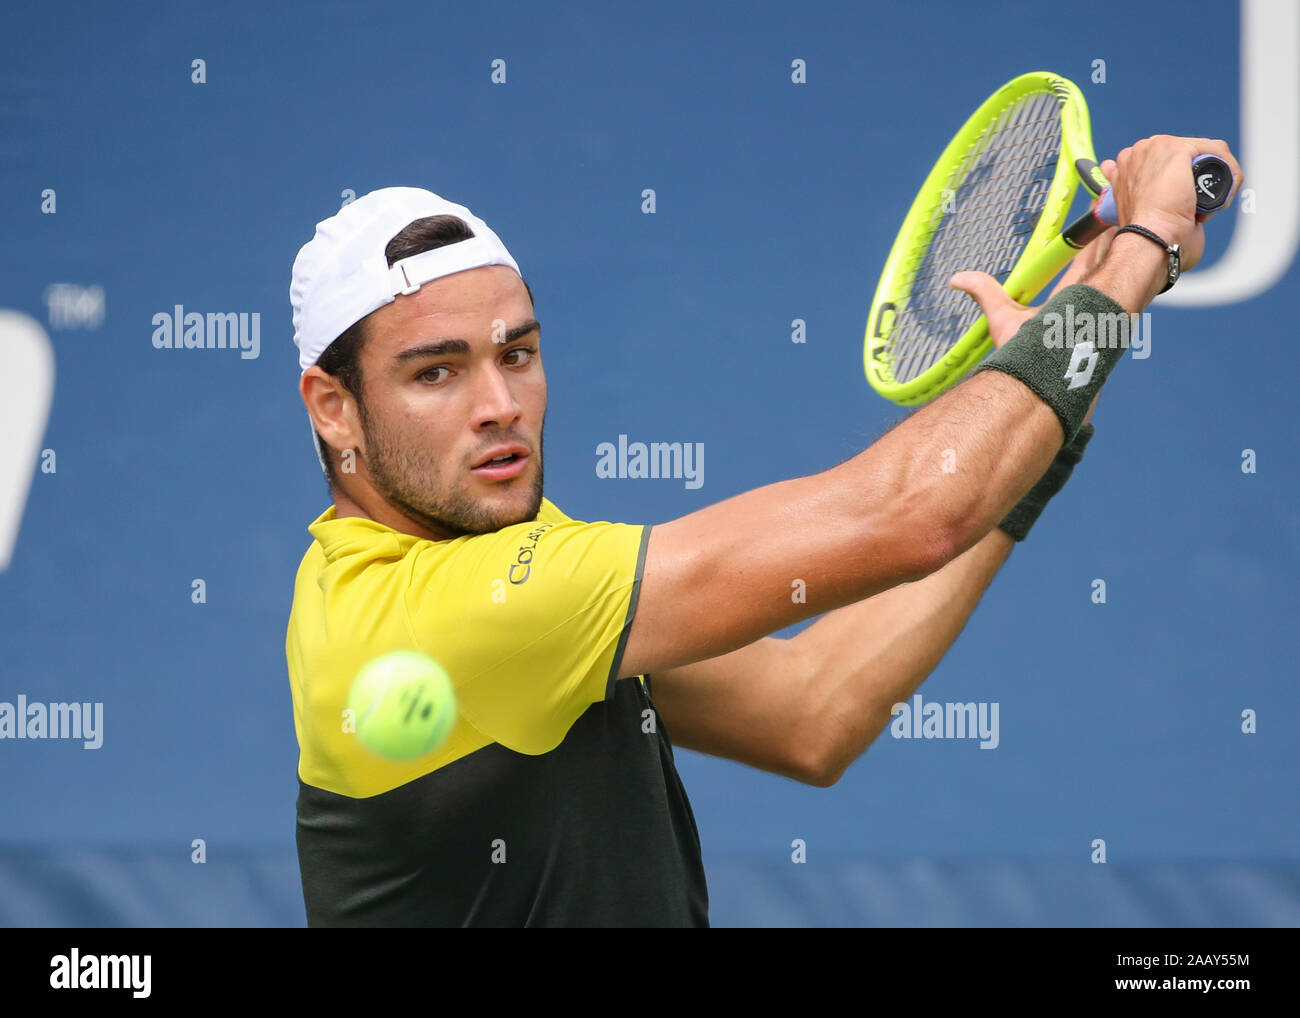 Italian tennis player Matteo Berrettini (ITA) playing a backhand shot during 2019 US Open tennis tournament, New York City, New York State, USA Stock Photo